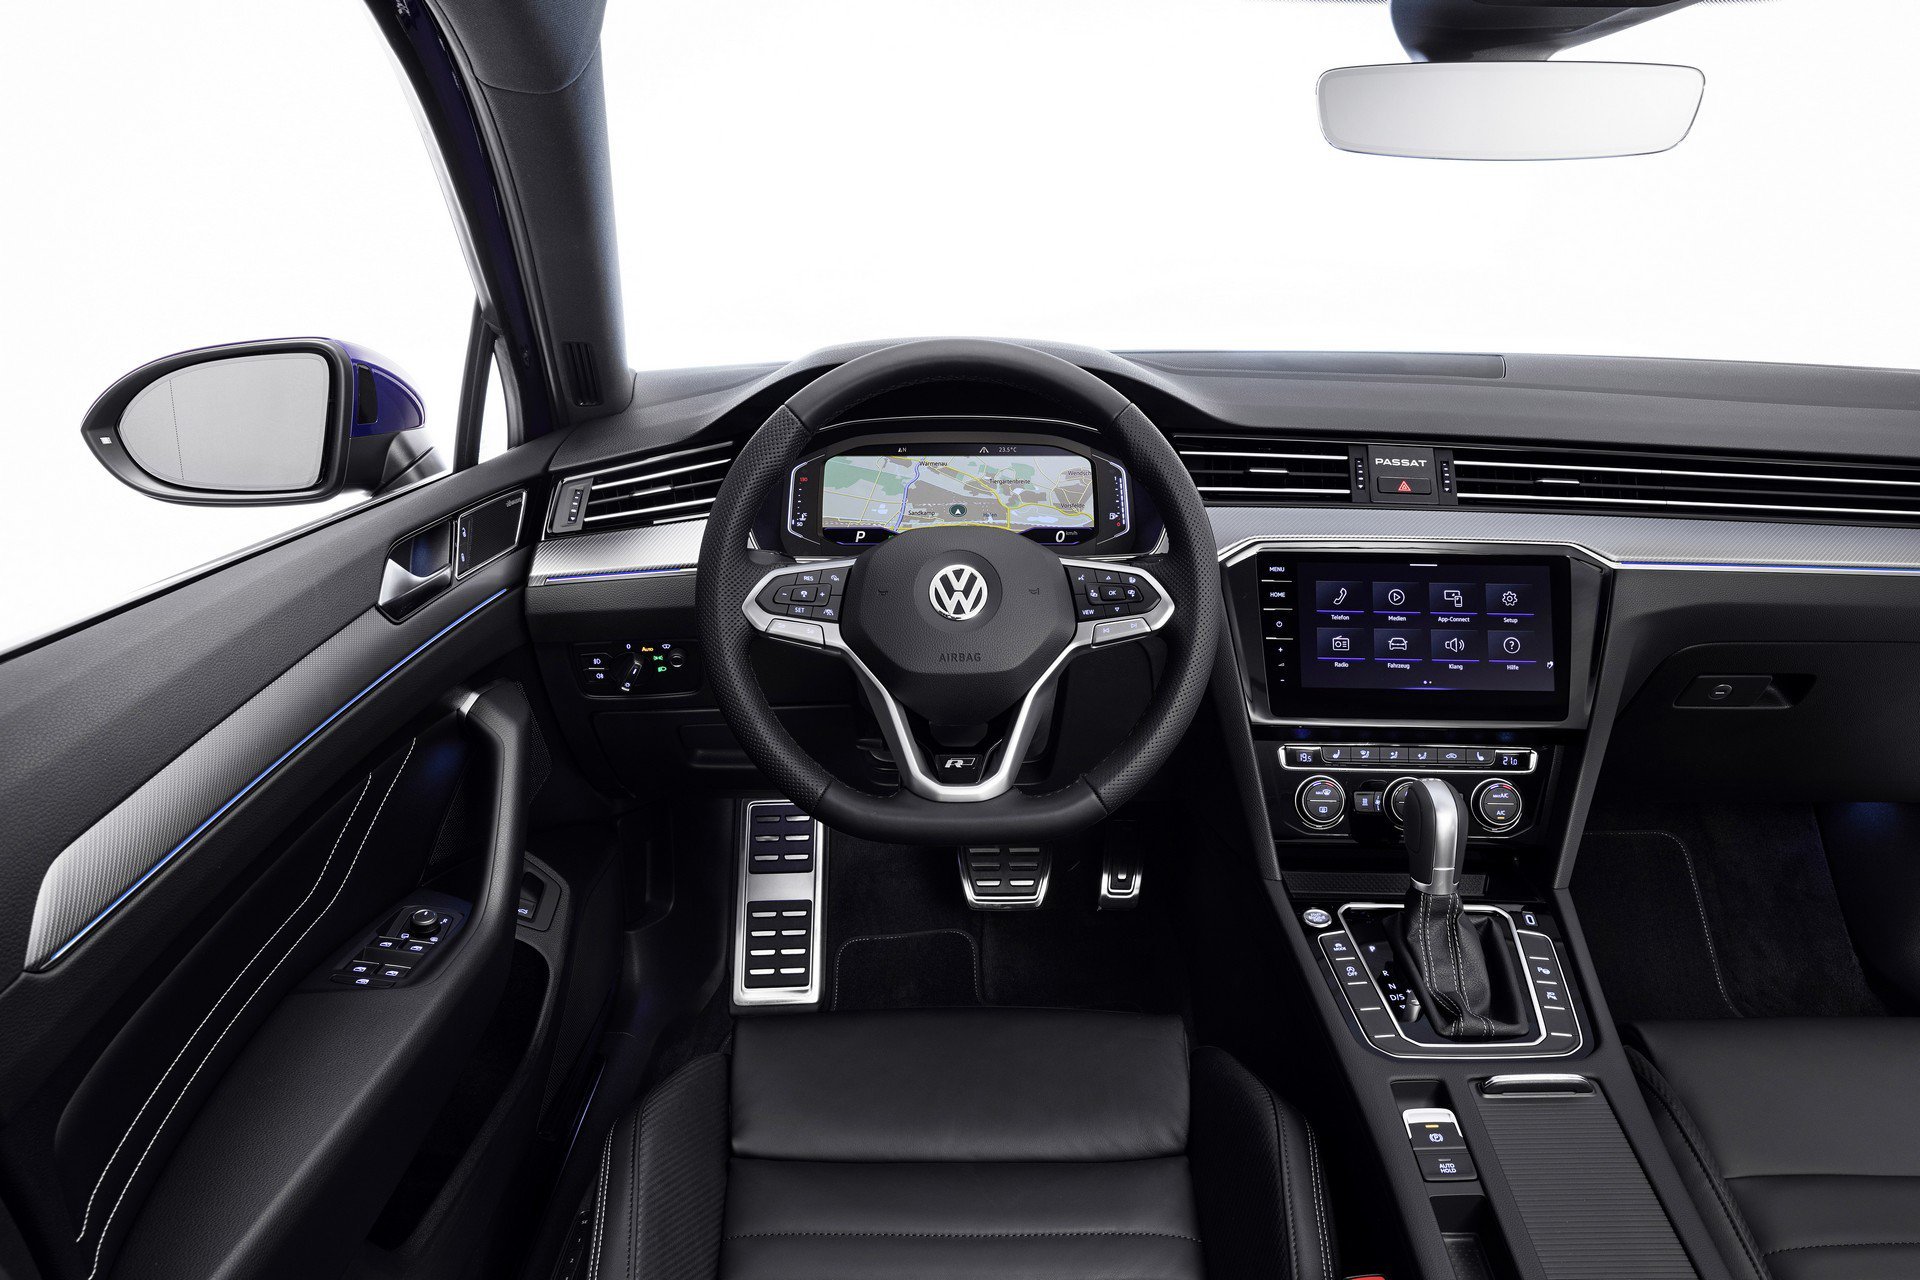 Immagine interni restyling nuova Volkswagen Passat 2019